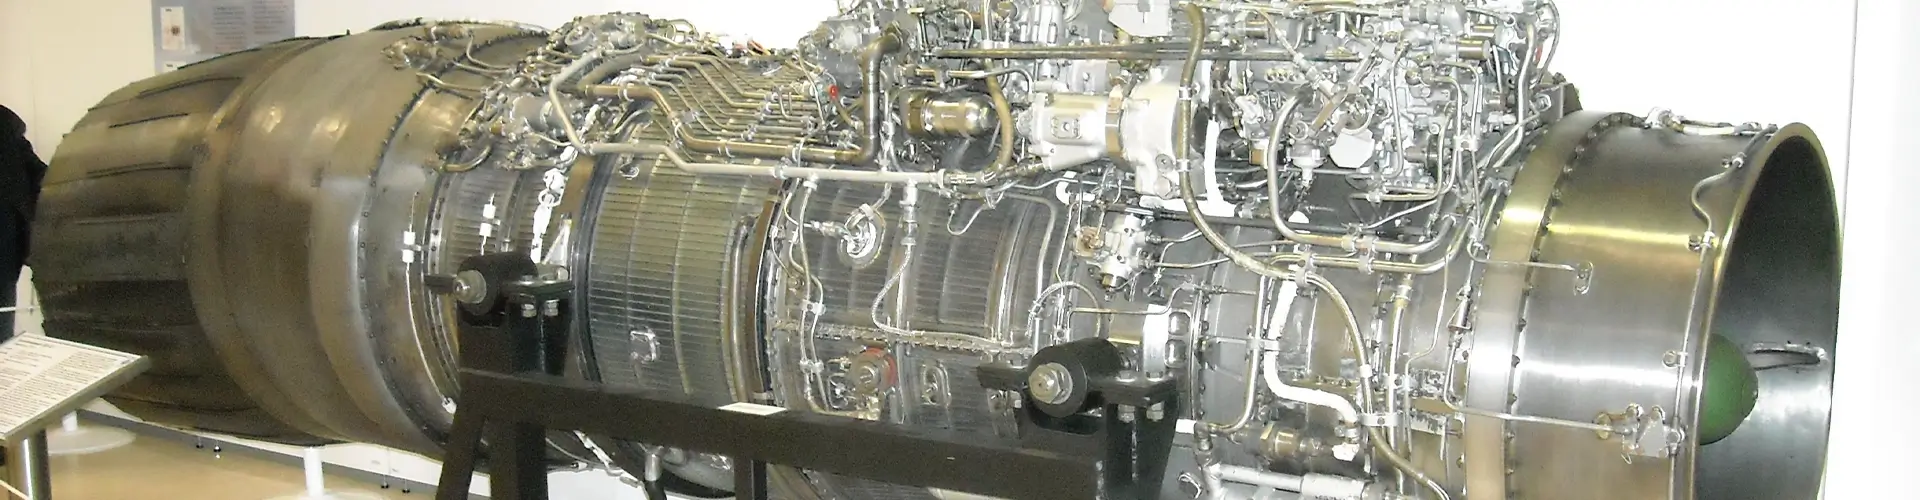 Airpower turbofan engine